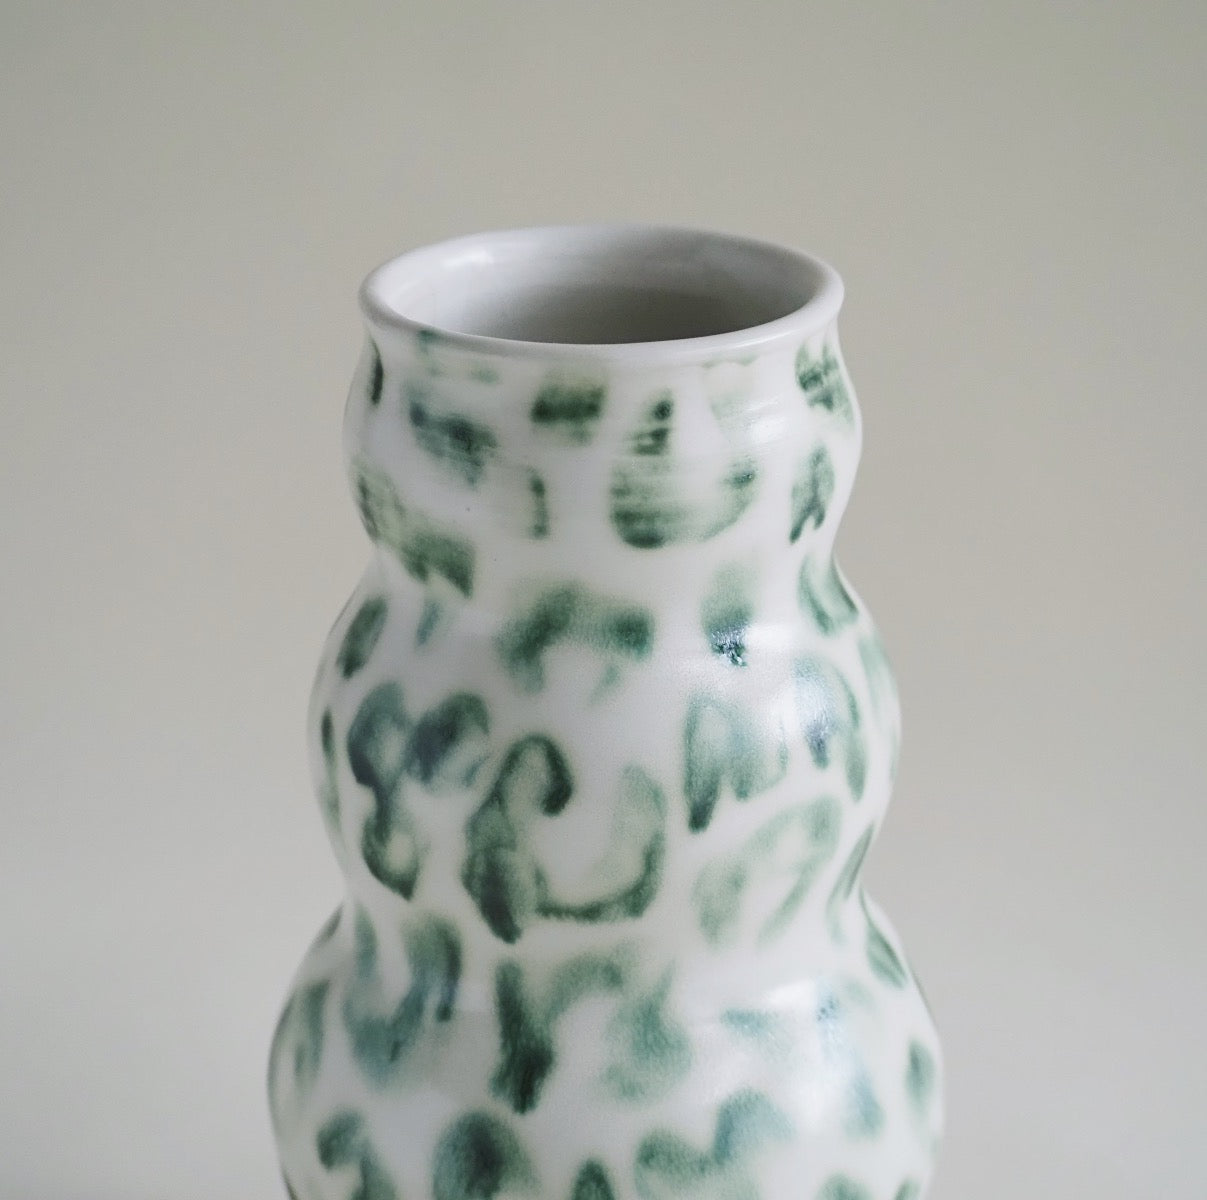 Objet Aimee Leopard Print Vase